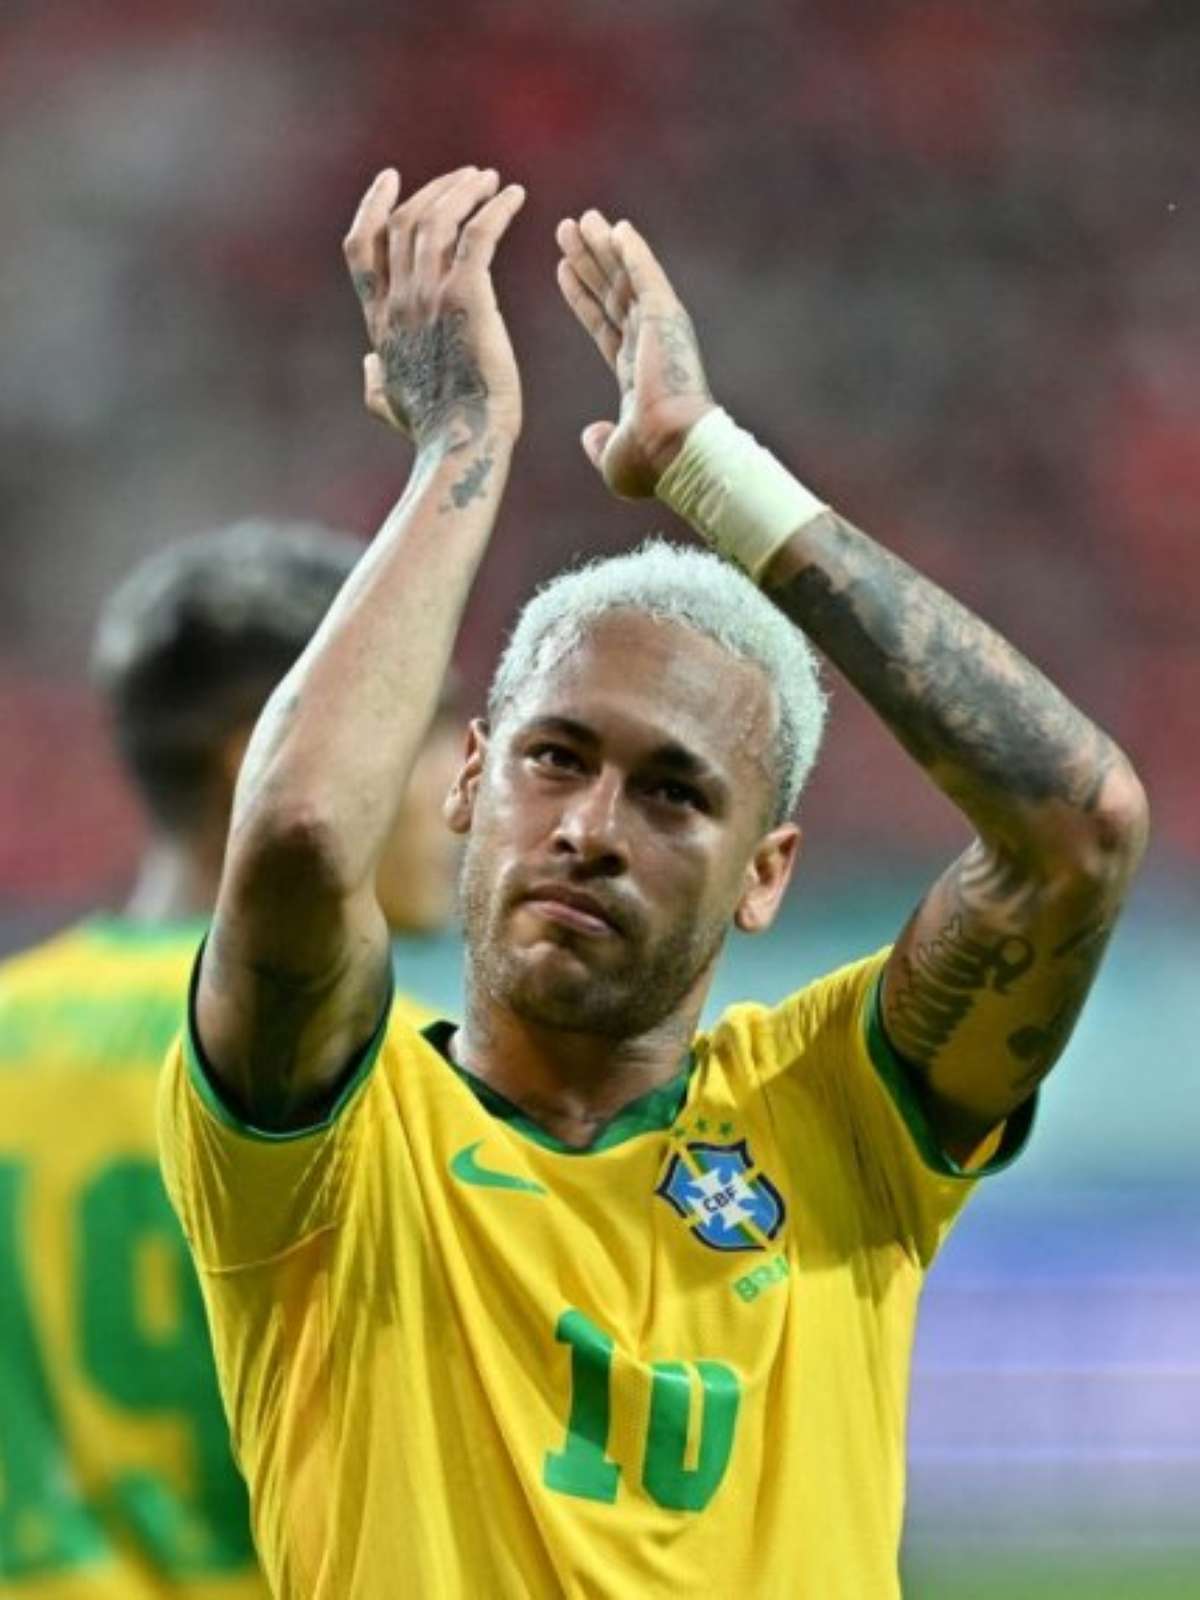 Figurinha Da Copa Neymar Jr Legend Bronze Original Panini Ne